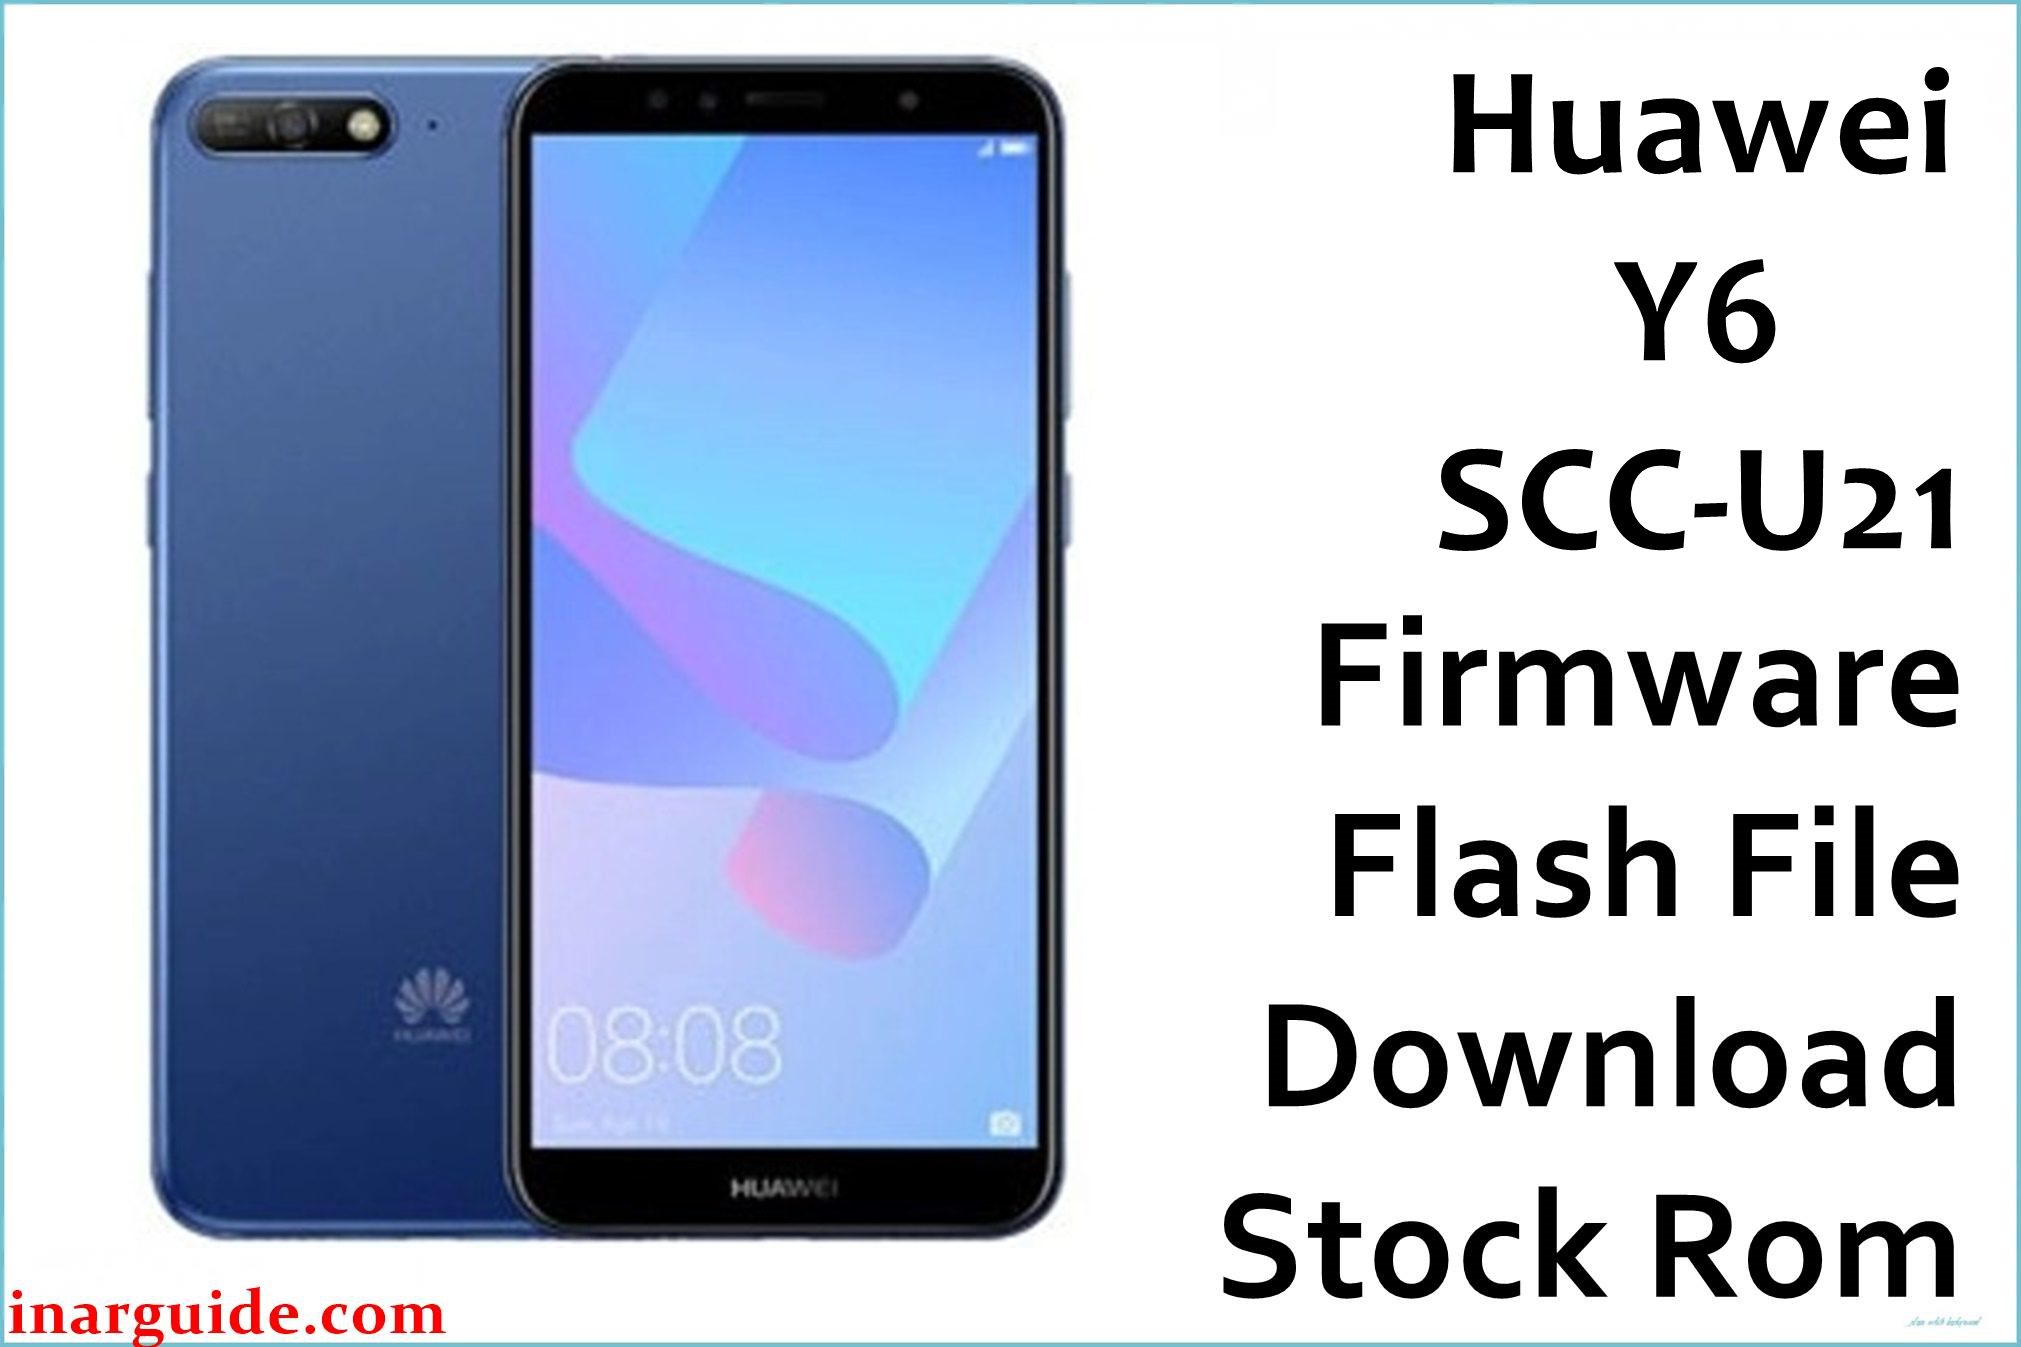 Huawei Y6 SCC U21